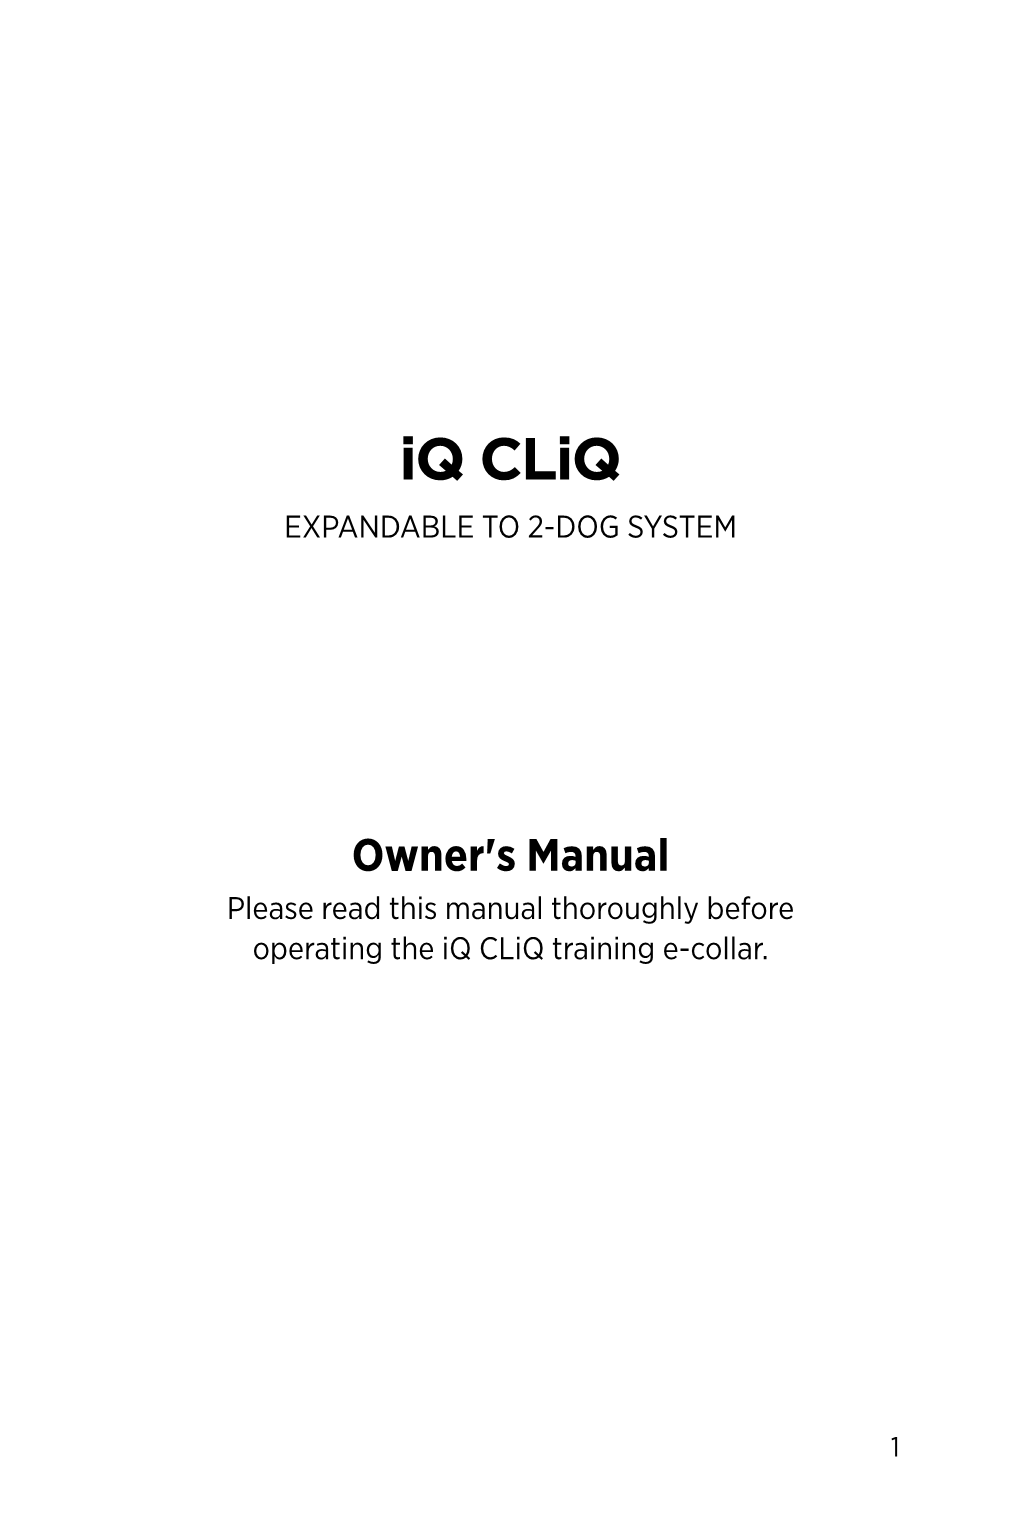 Iq Cliq EXPANDABLE to 2-DOG SYSTEM